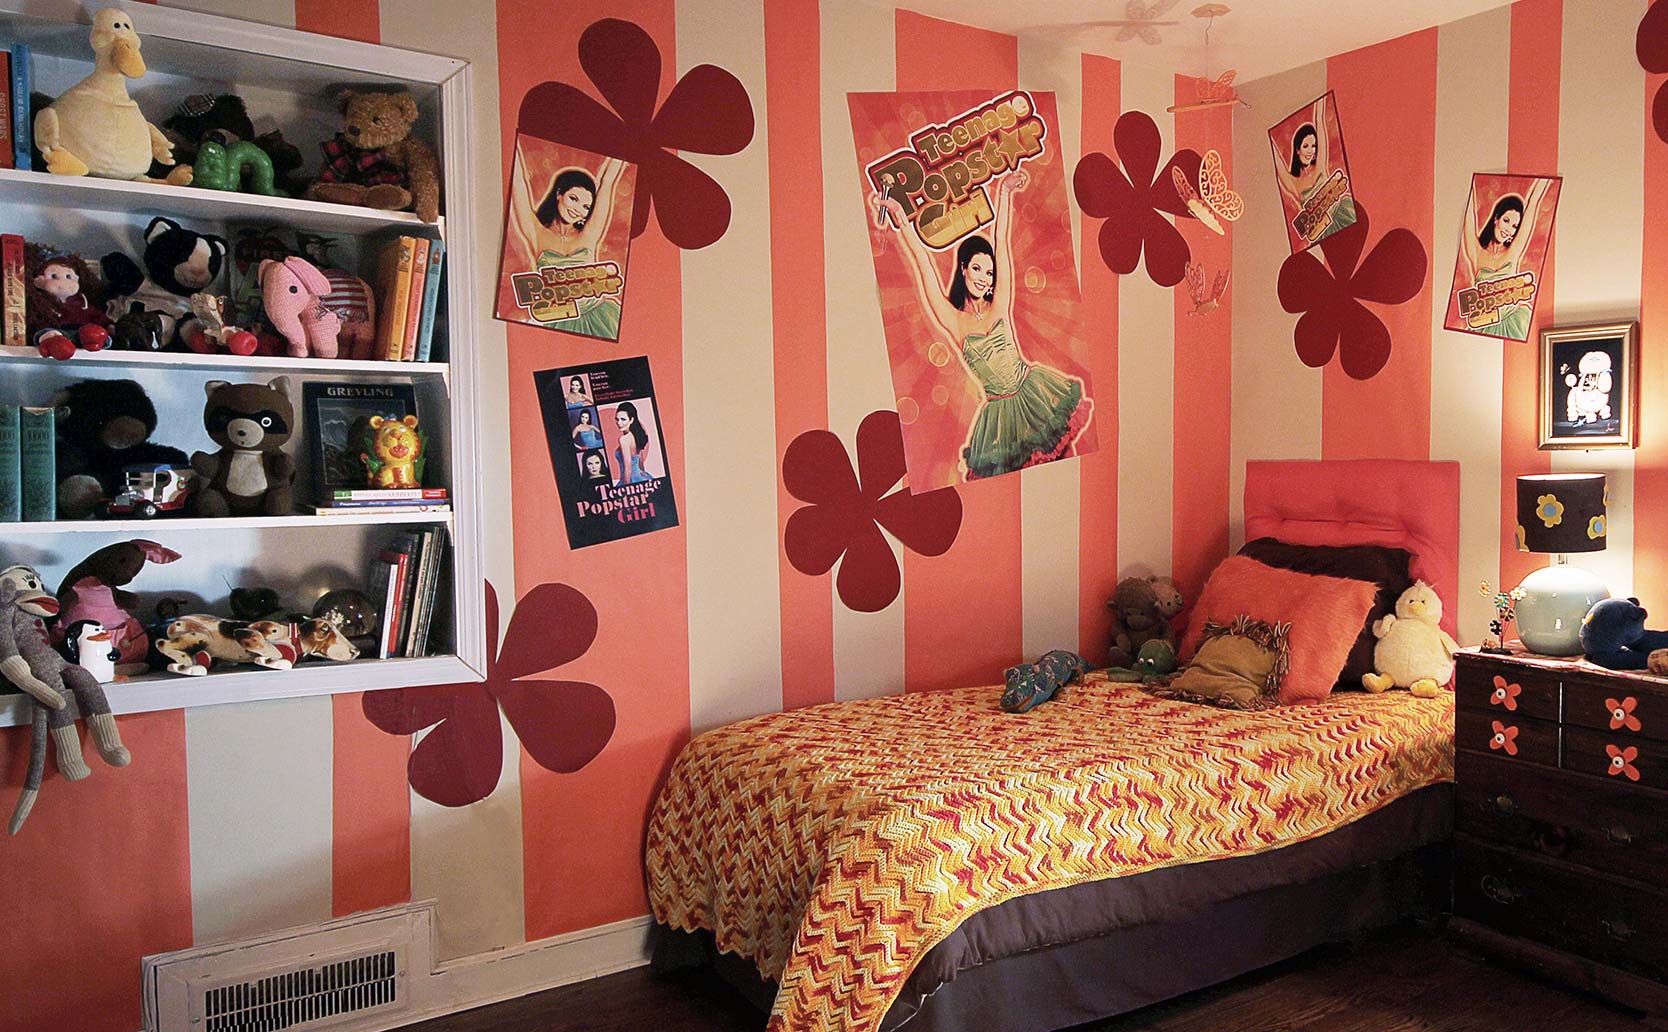 Teenager bedroom showing posters